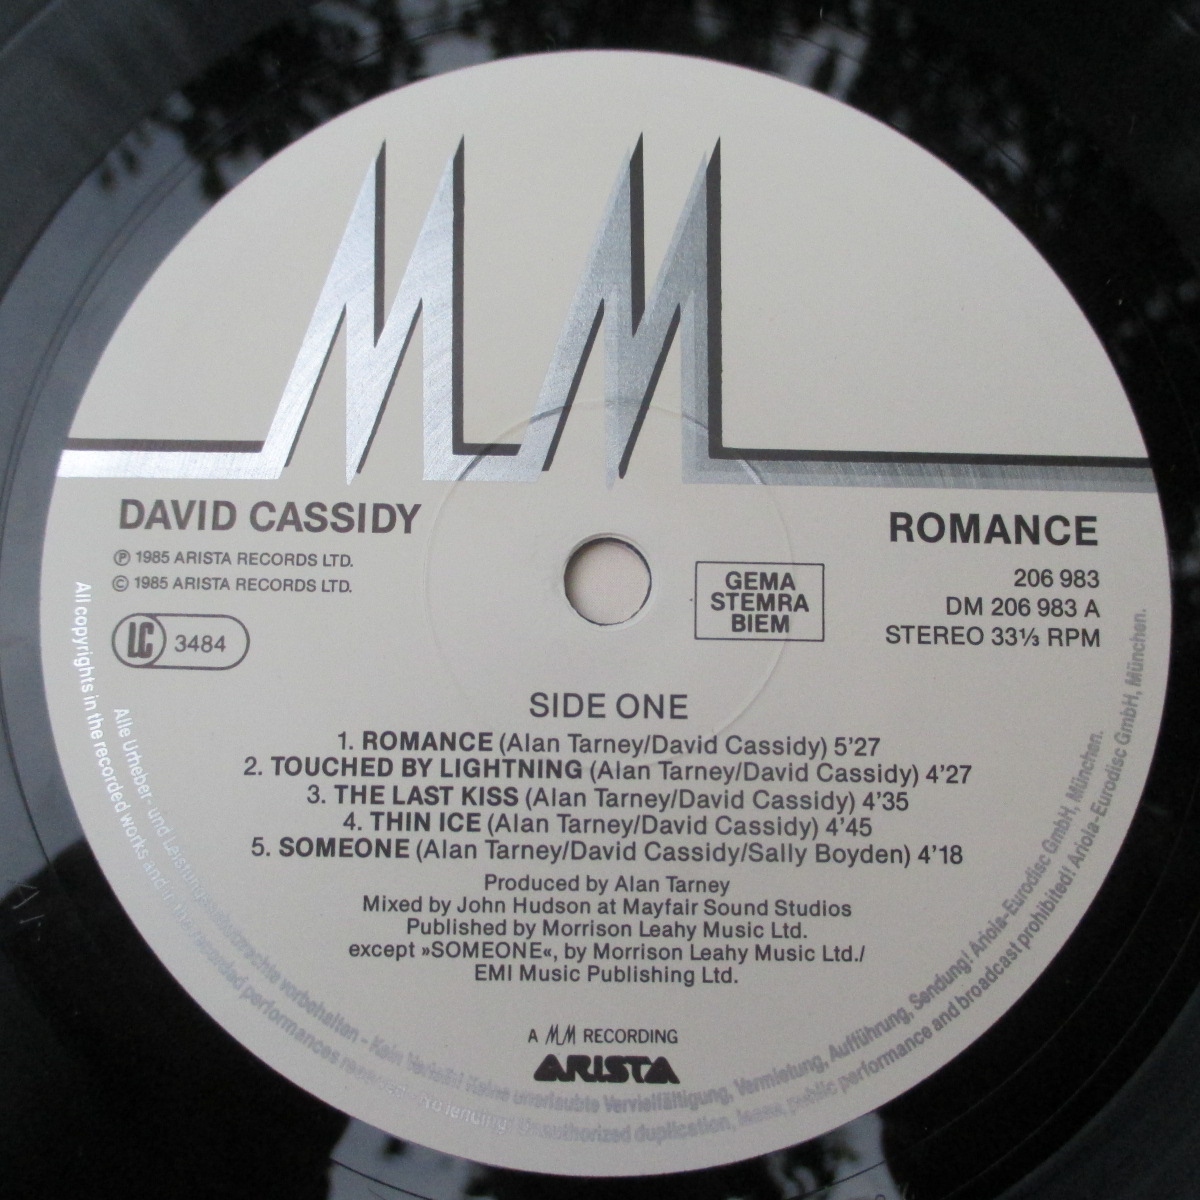 Disc Vinil Lp David Cassidy Romance Hifi Audio Mix